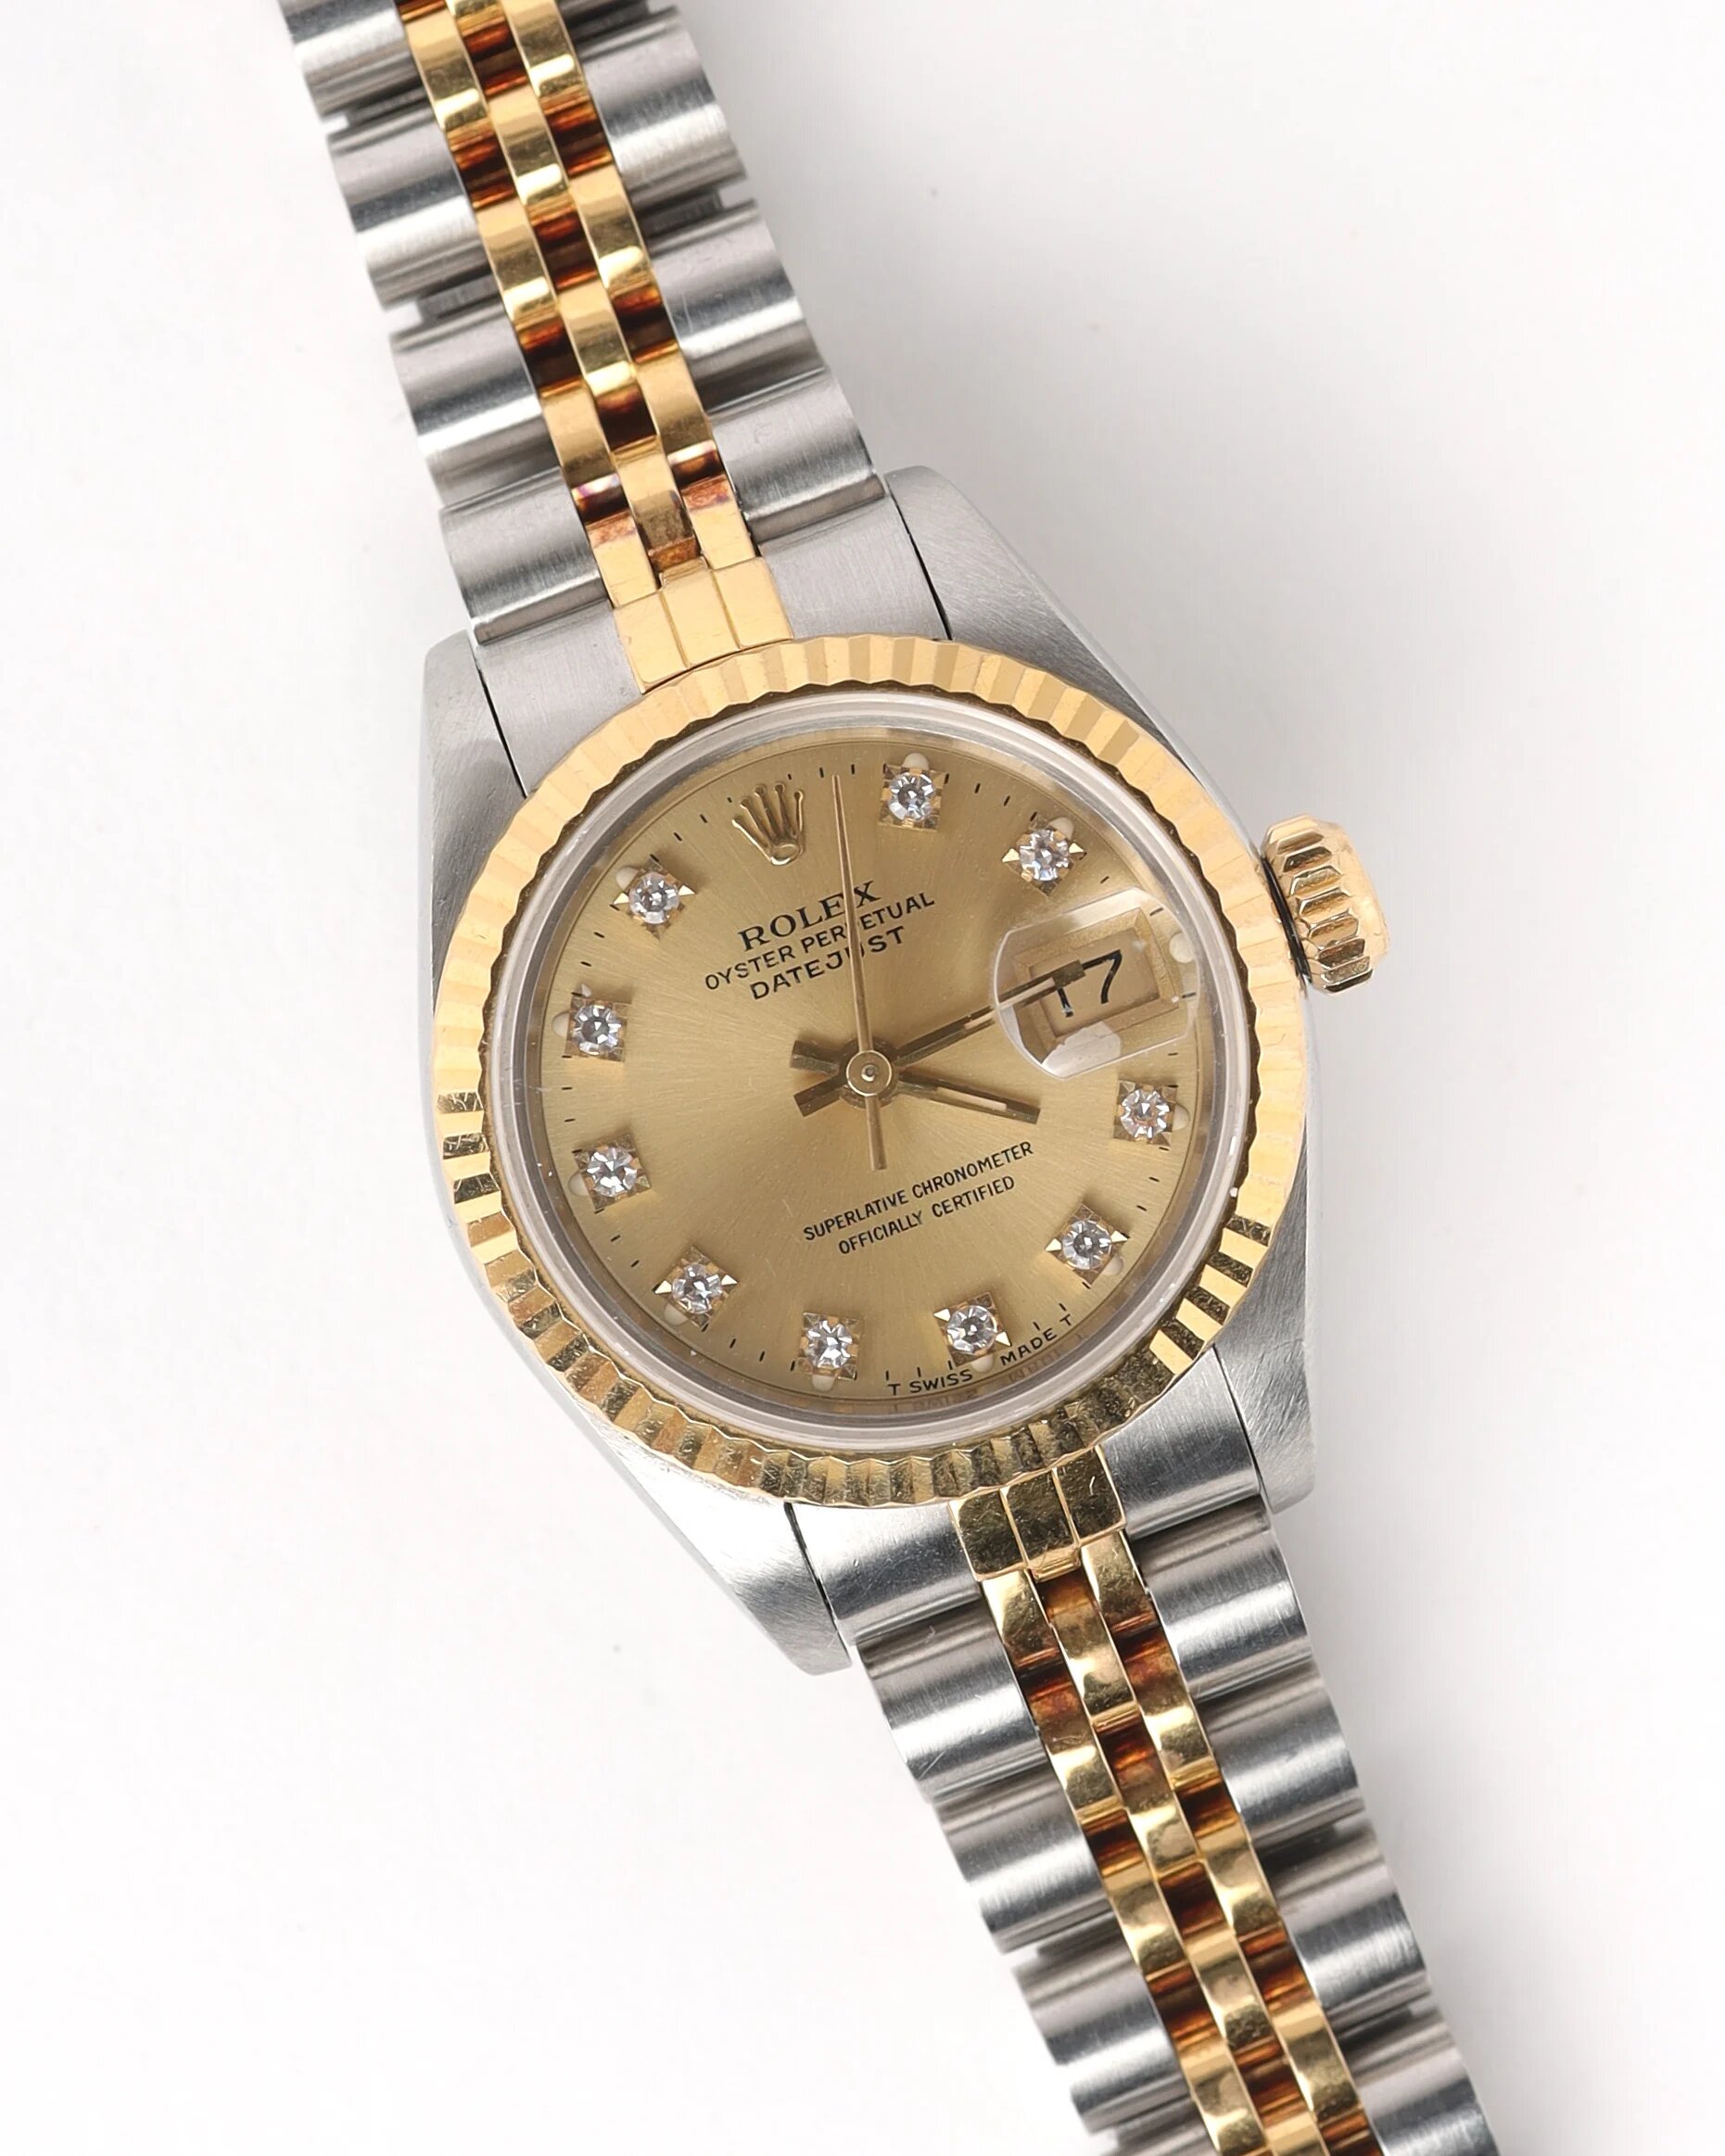 Lady-Datejust 26mm Diamond Dial 1987 Watch